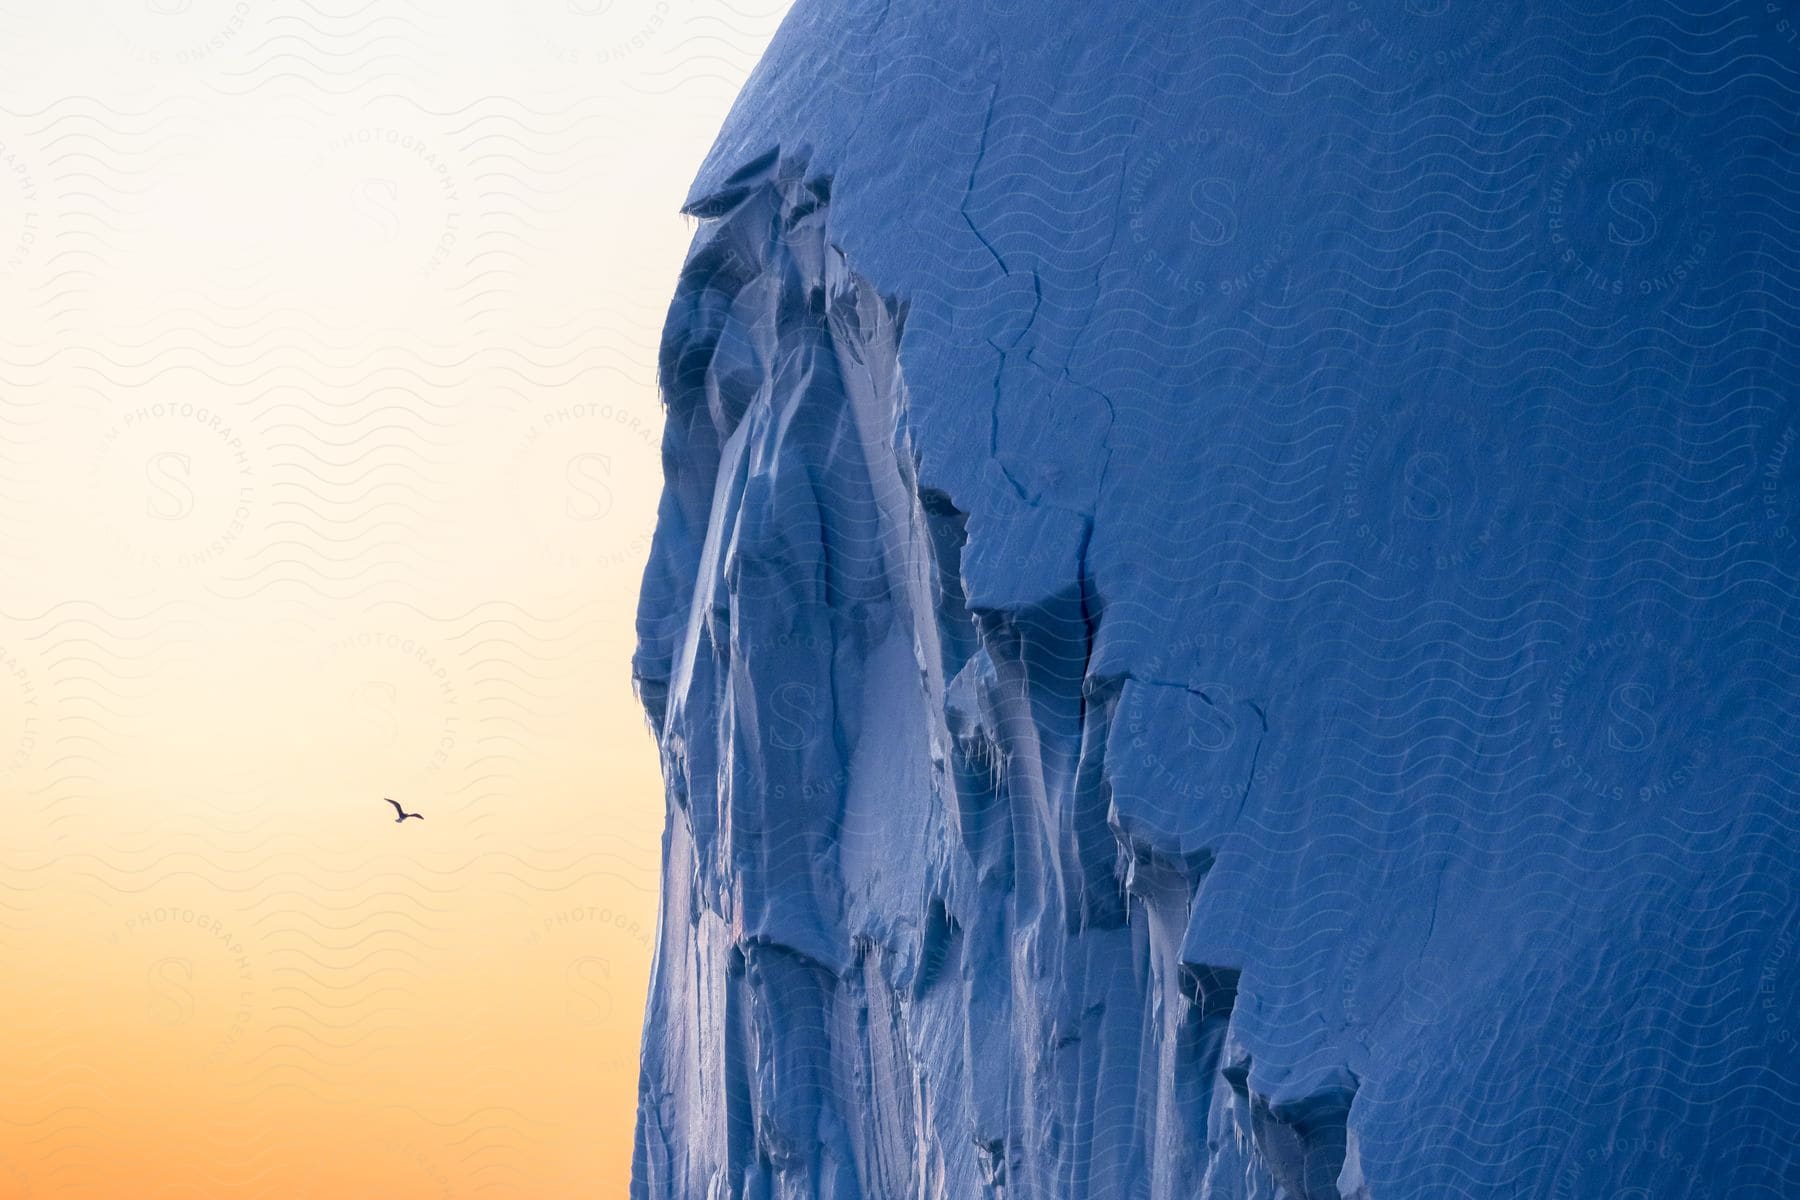 A bird flies near a melting glacier in greenland during the winter season